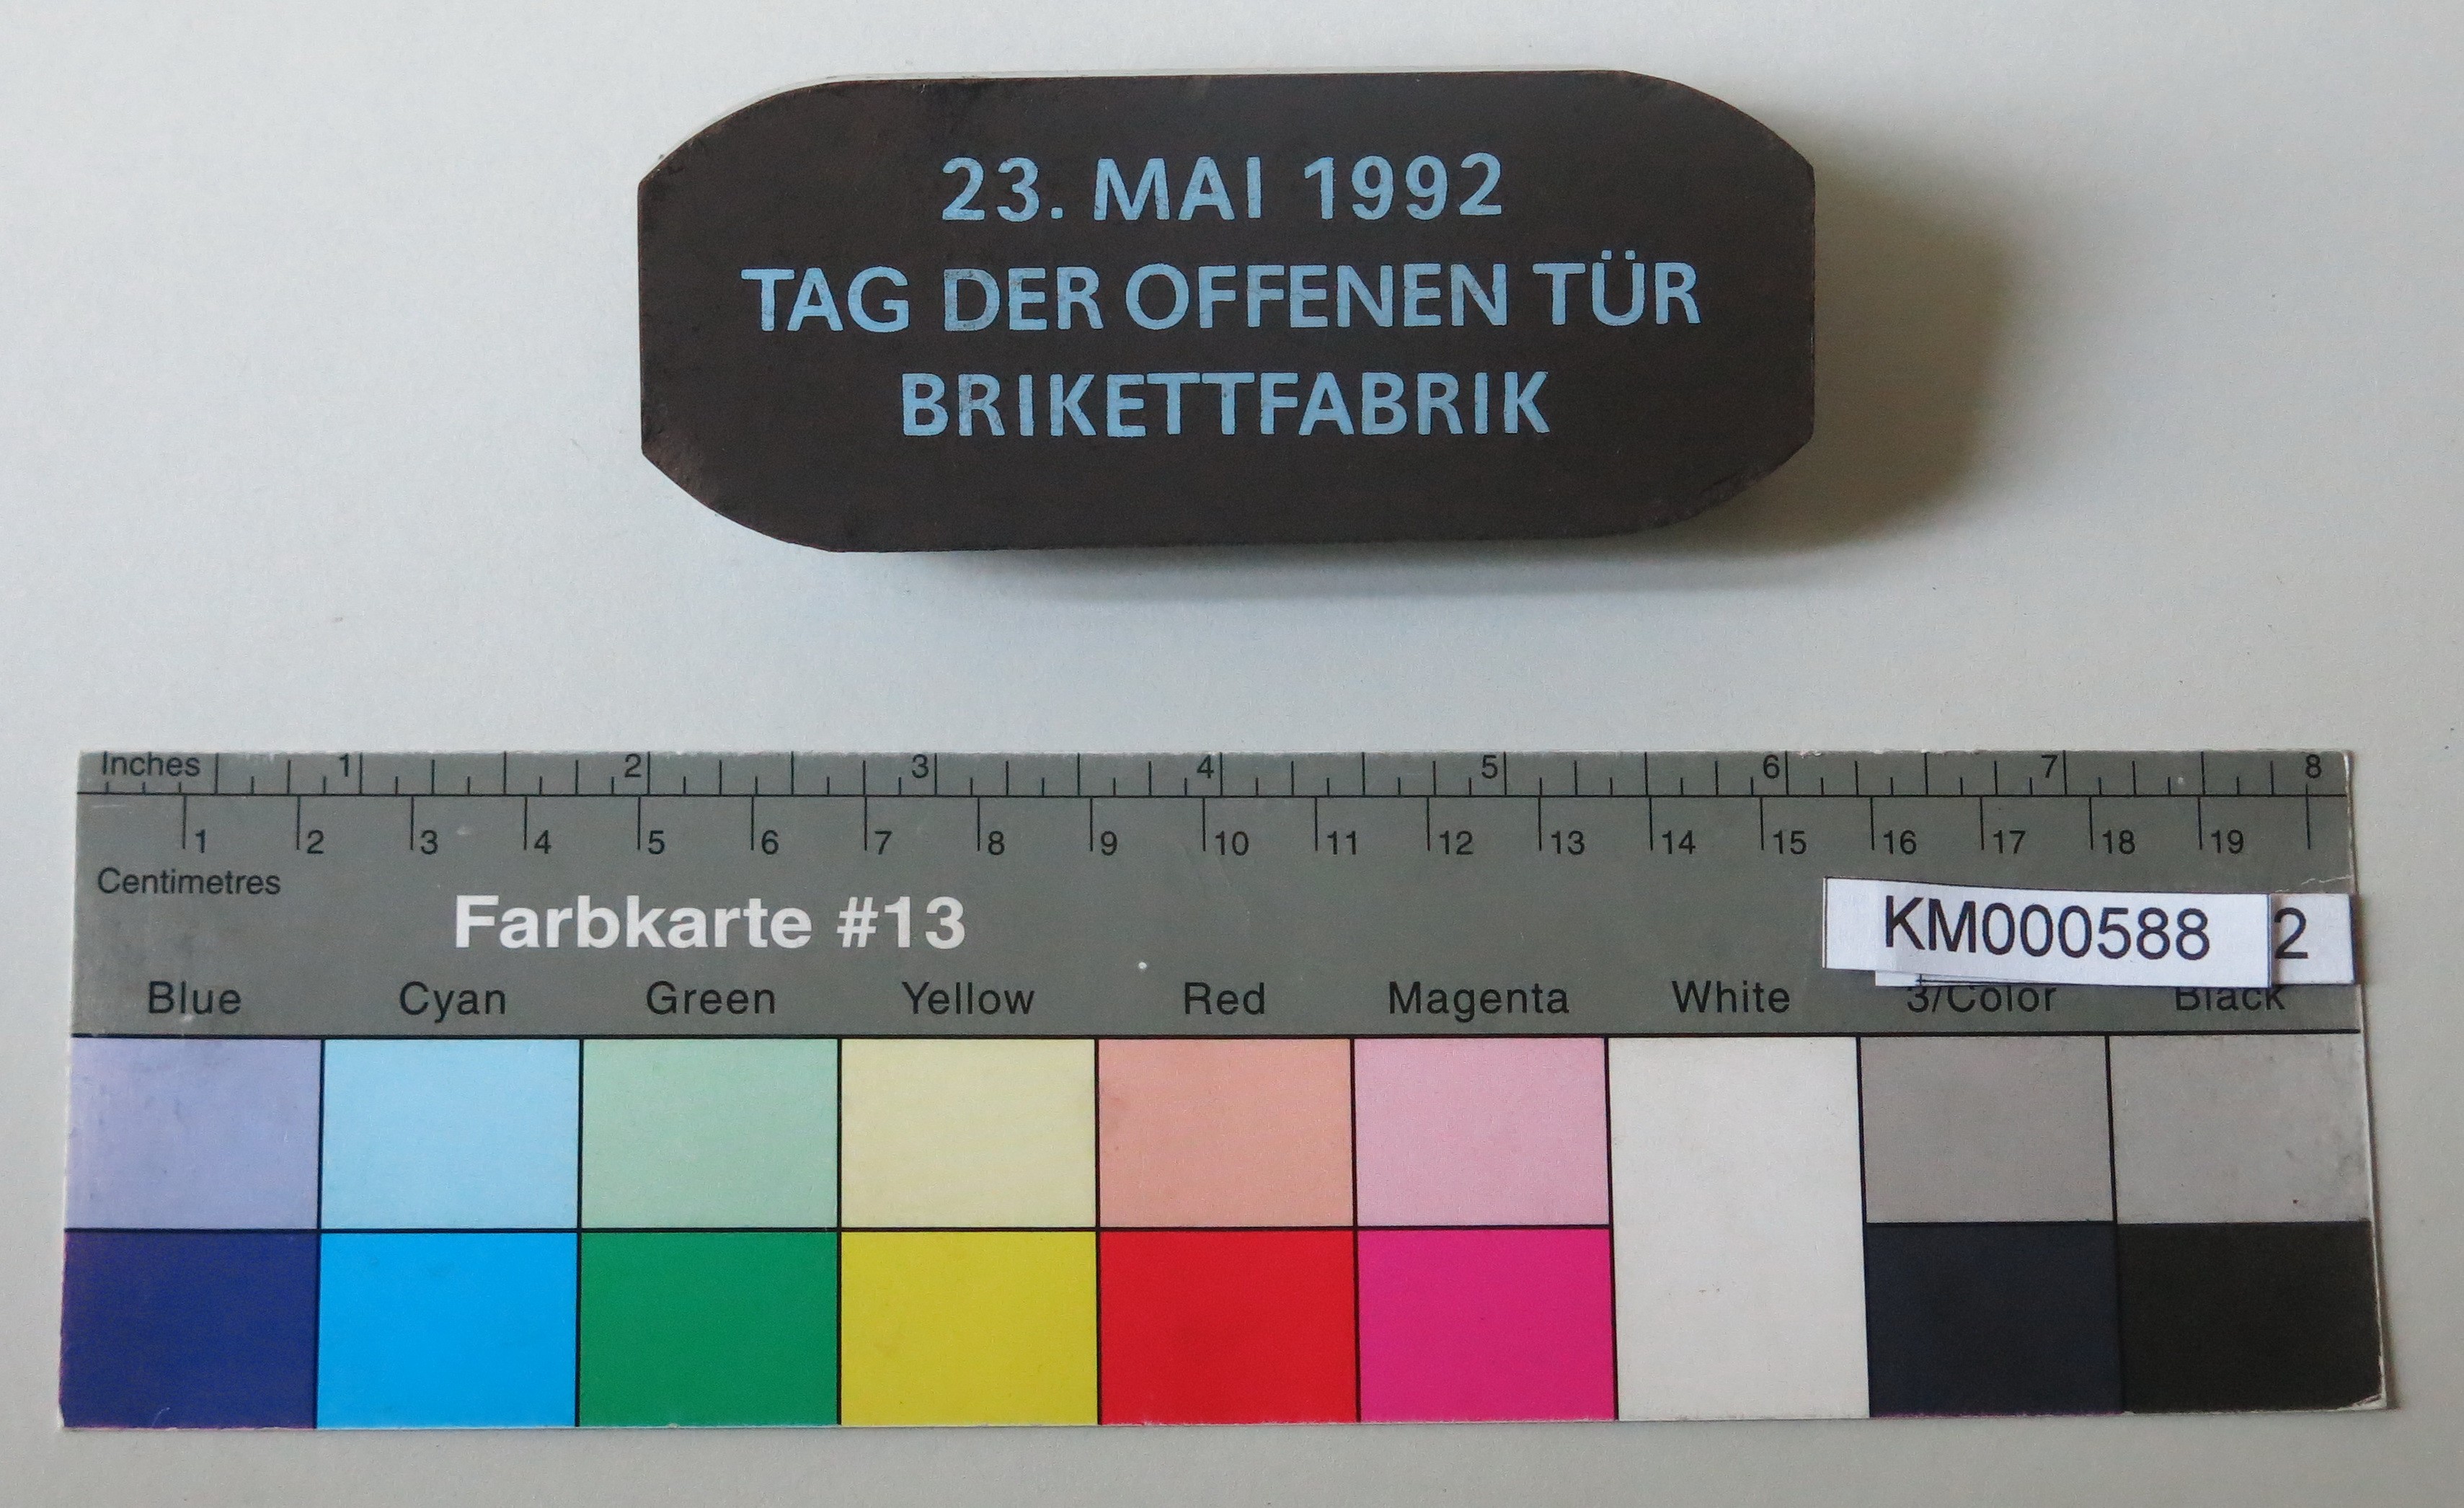 Zierbrikett "23. MAI 1992 TAG DER OFFENEN TÜR BRIKETTFABRIK"  (Energiefabrik Knappenrode CC BY-SA)